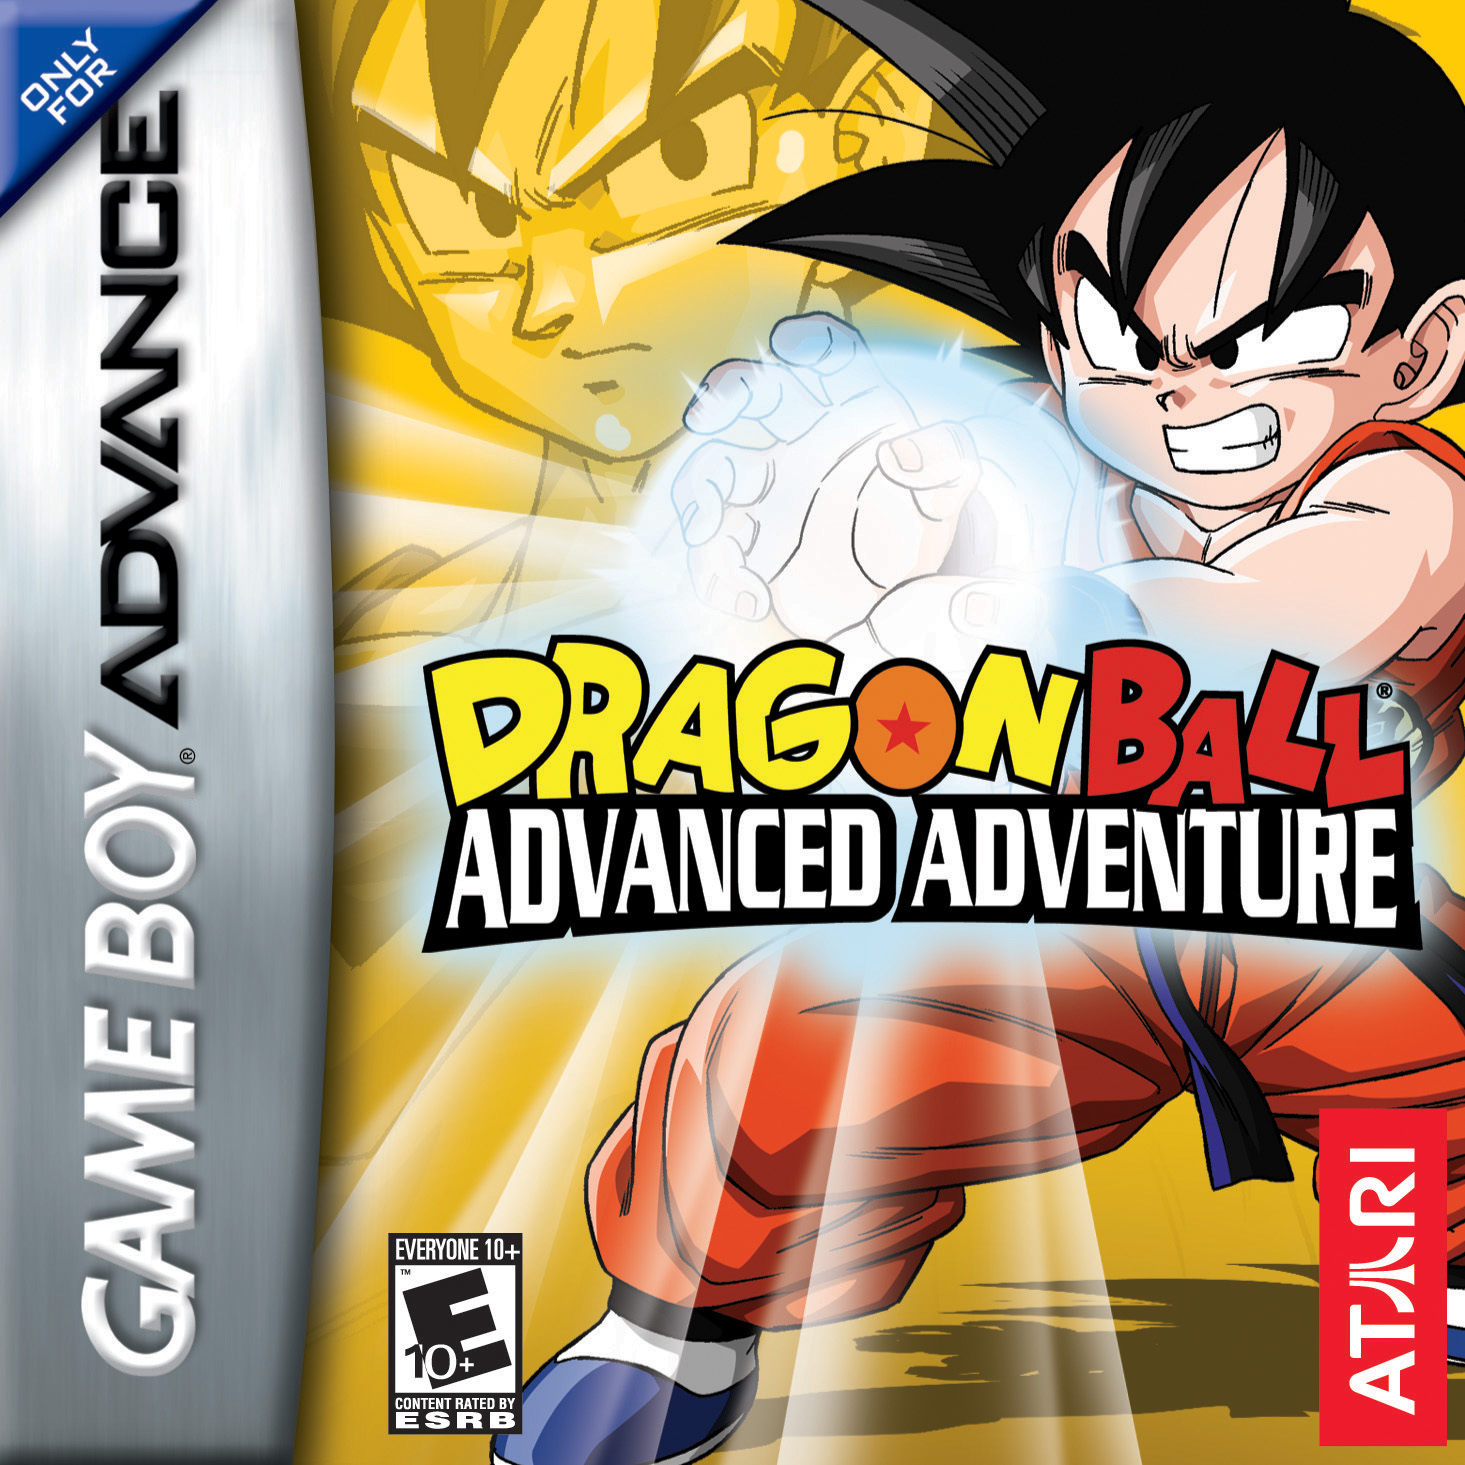 DBOGX - No Agenda Gameplay & Giveaways! (Dragon Ball Online Galaxy